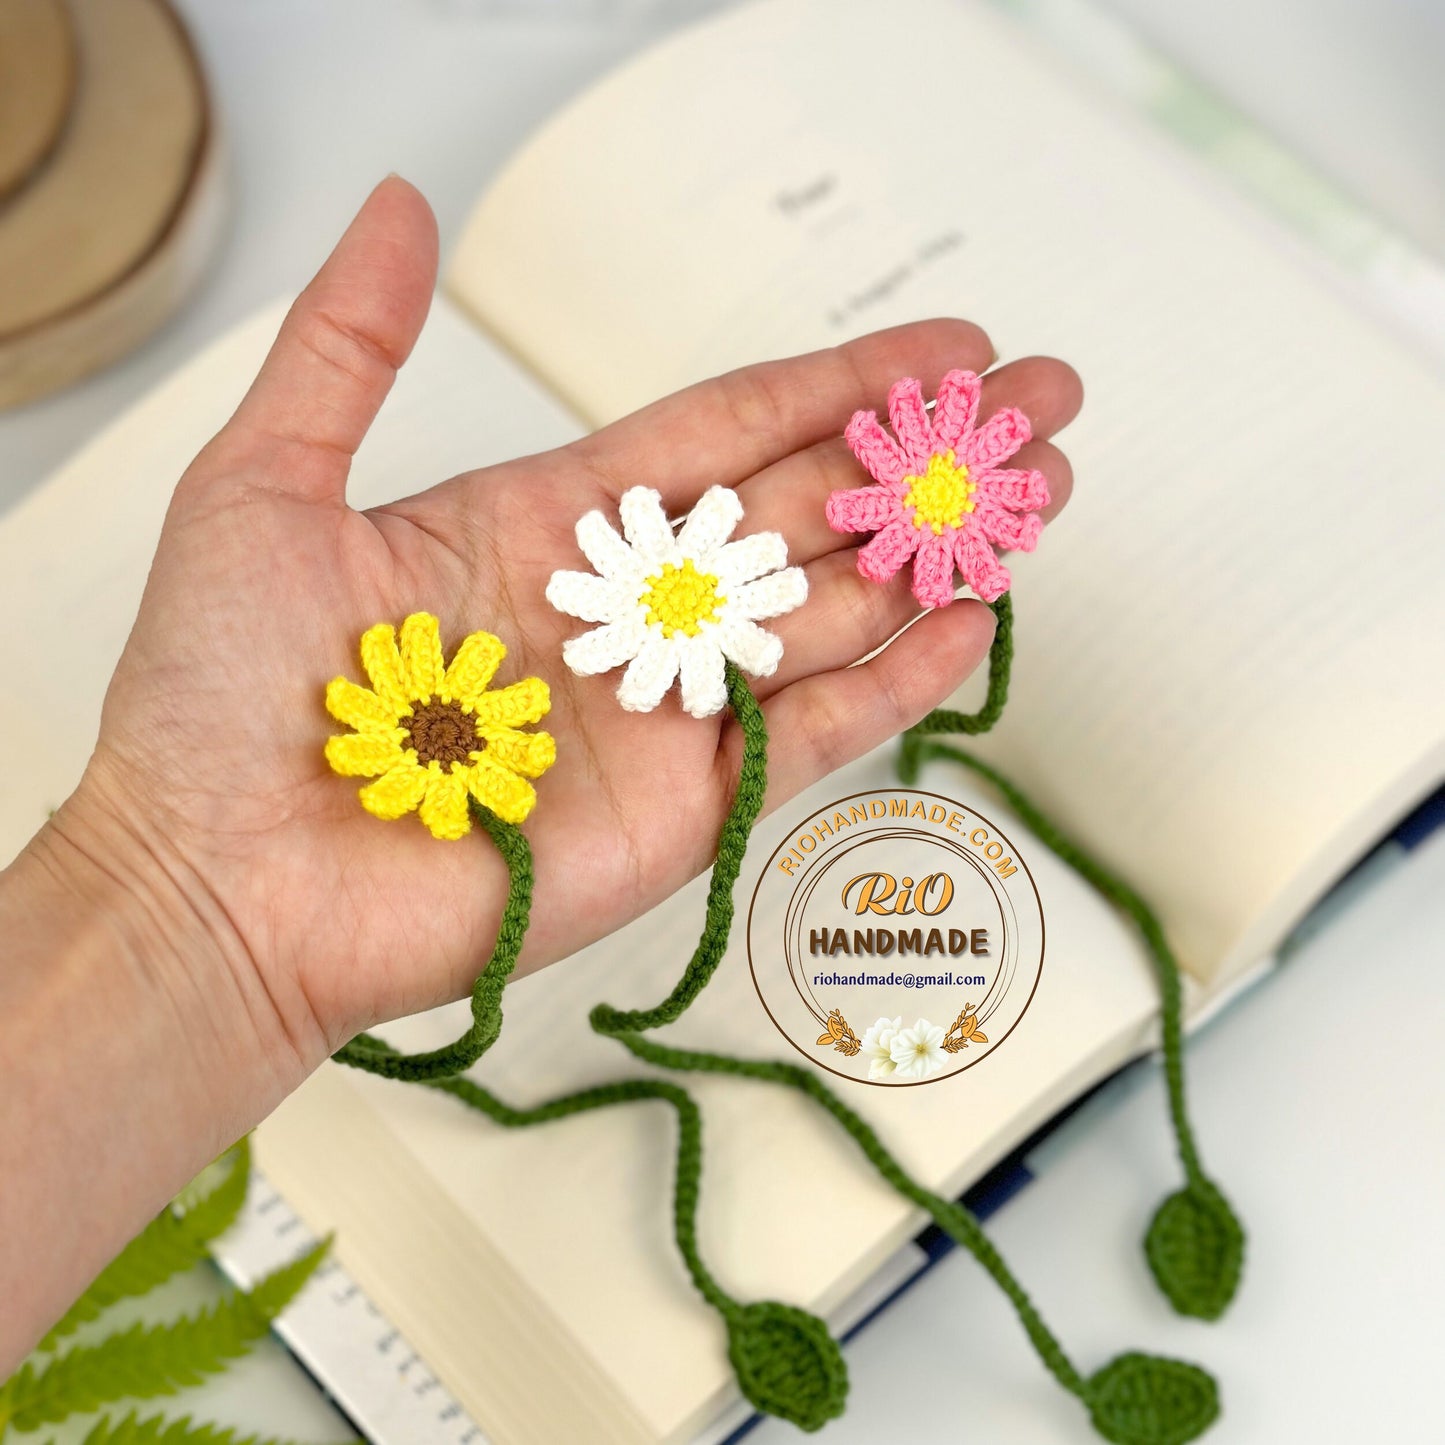 Ready To Ship, Rio Handmade Crochet Flower Bookmark, Gift For Teacher, Daisy Bookmark